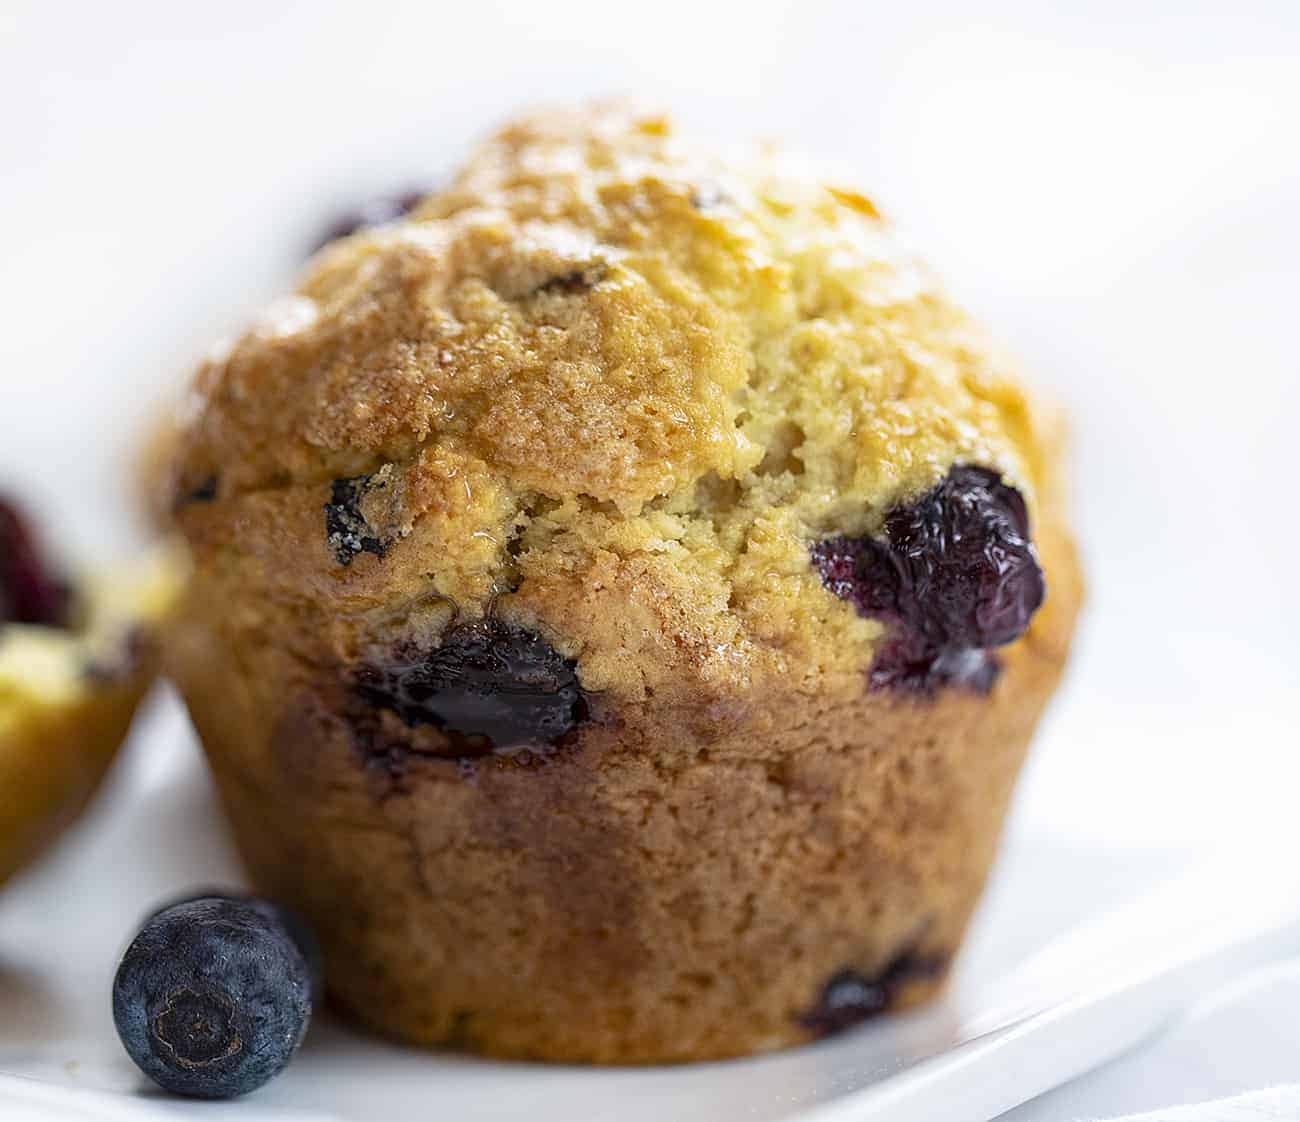 https://iambaker.net/wp-content/uploads/2020/04/blueberry-muffin.jpg